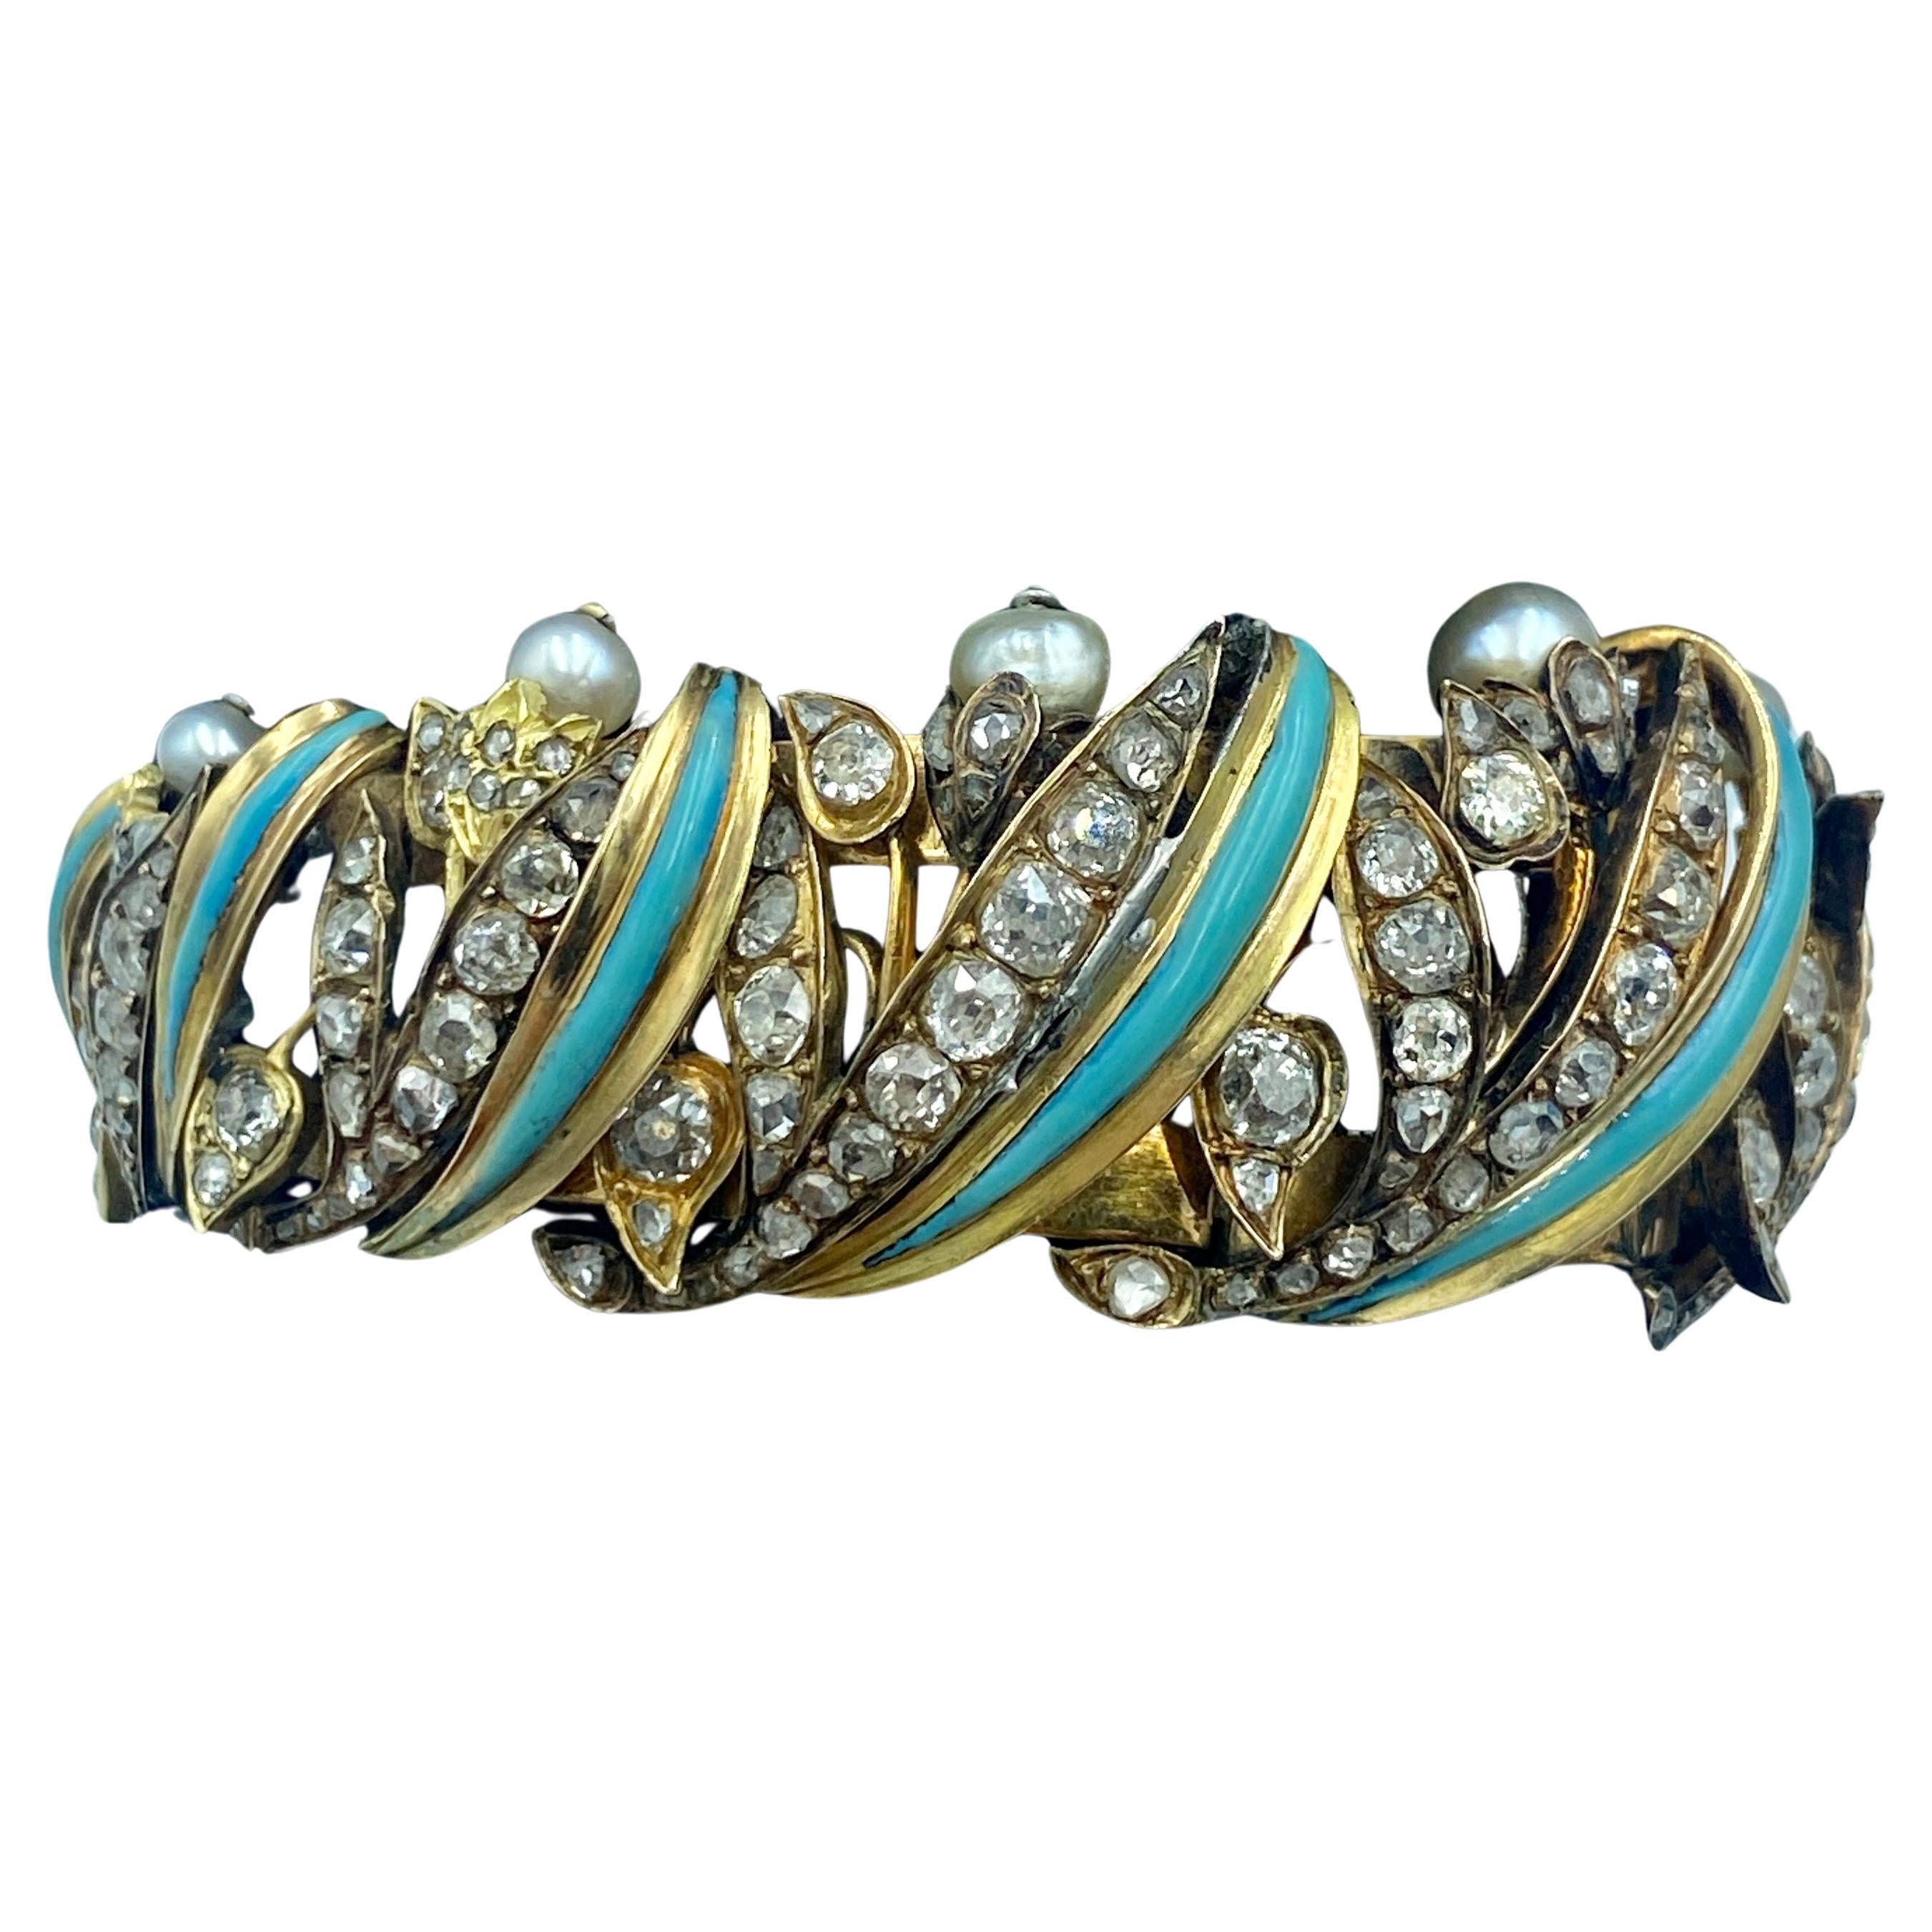 1820 European 18k gold, turquoise, old mine cut diamond & natural pearl bracelet For Sale